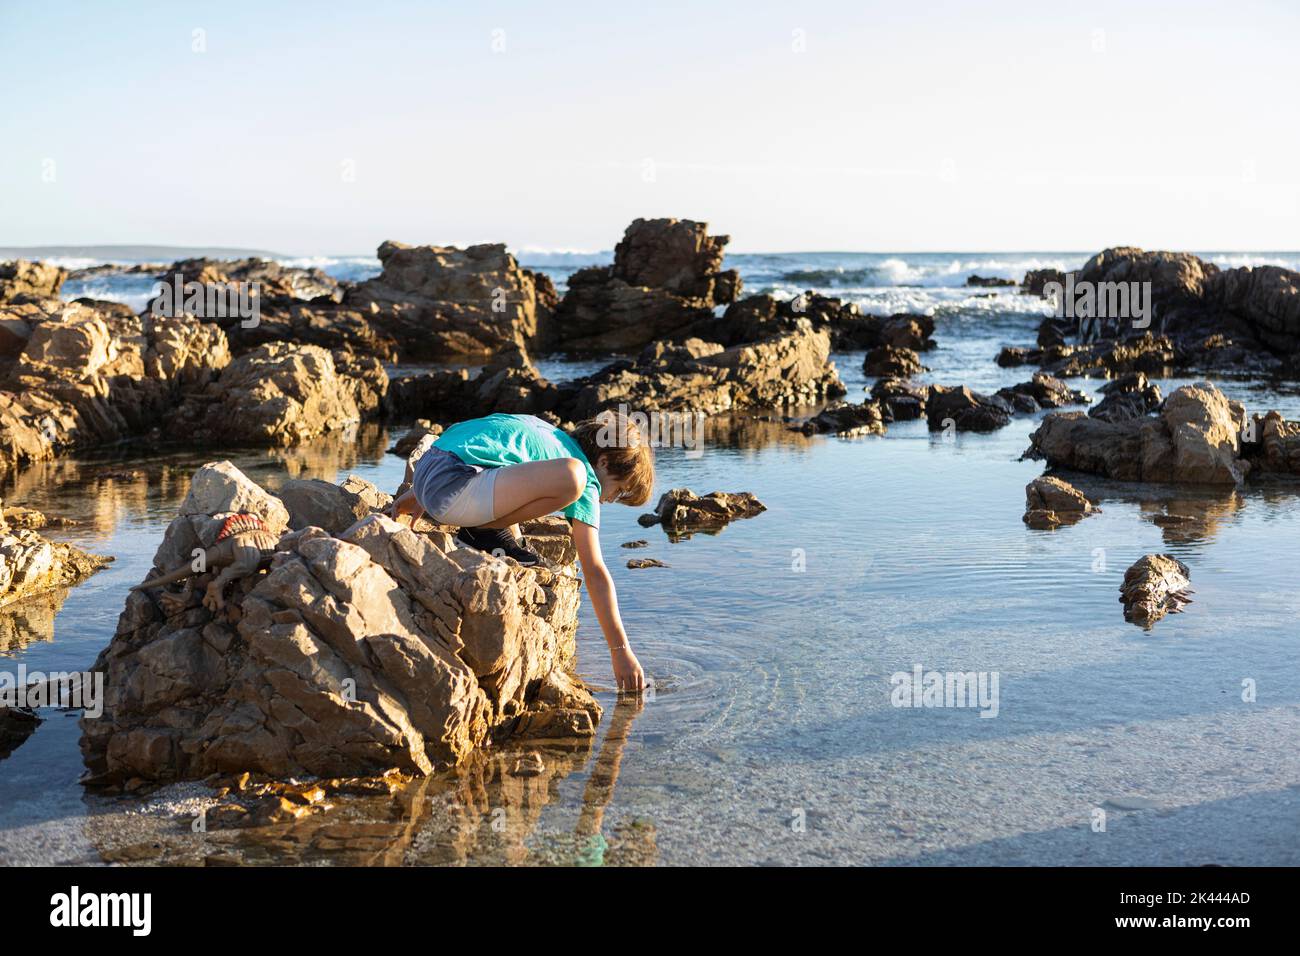 Sudafrica, Gansbaai, De Kelders, Boy (8-9) esplorando la costa rocciosa Foto Stock